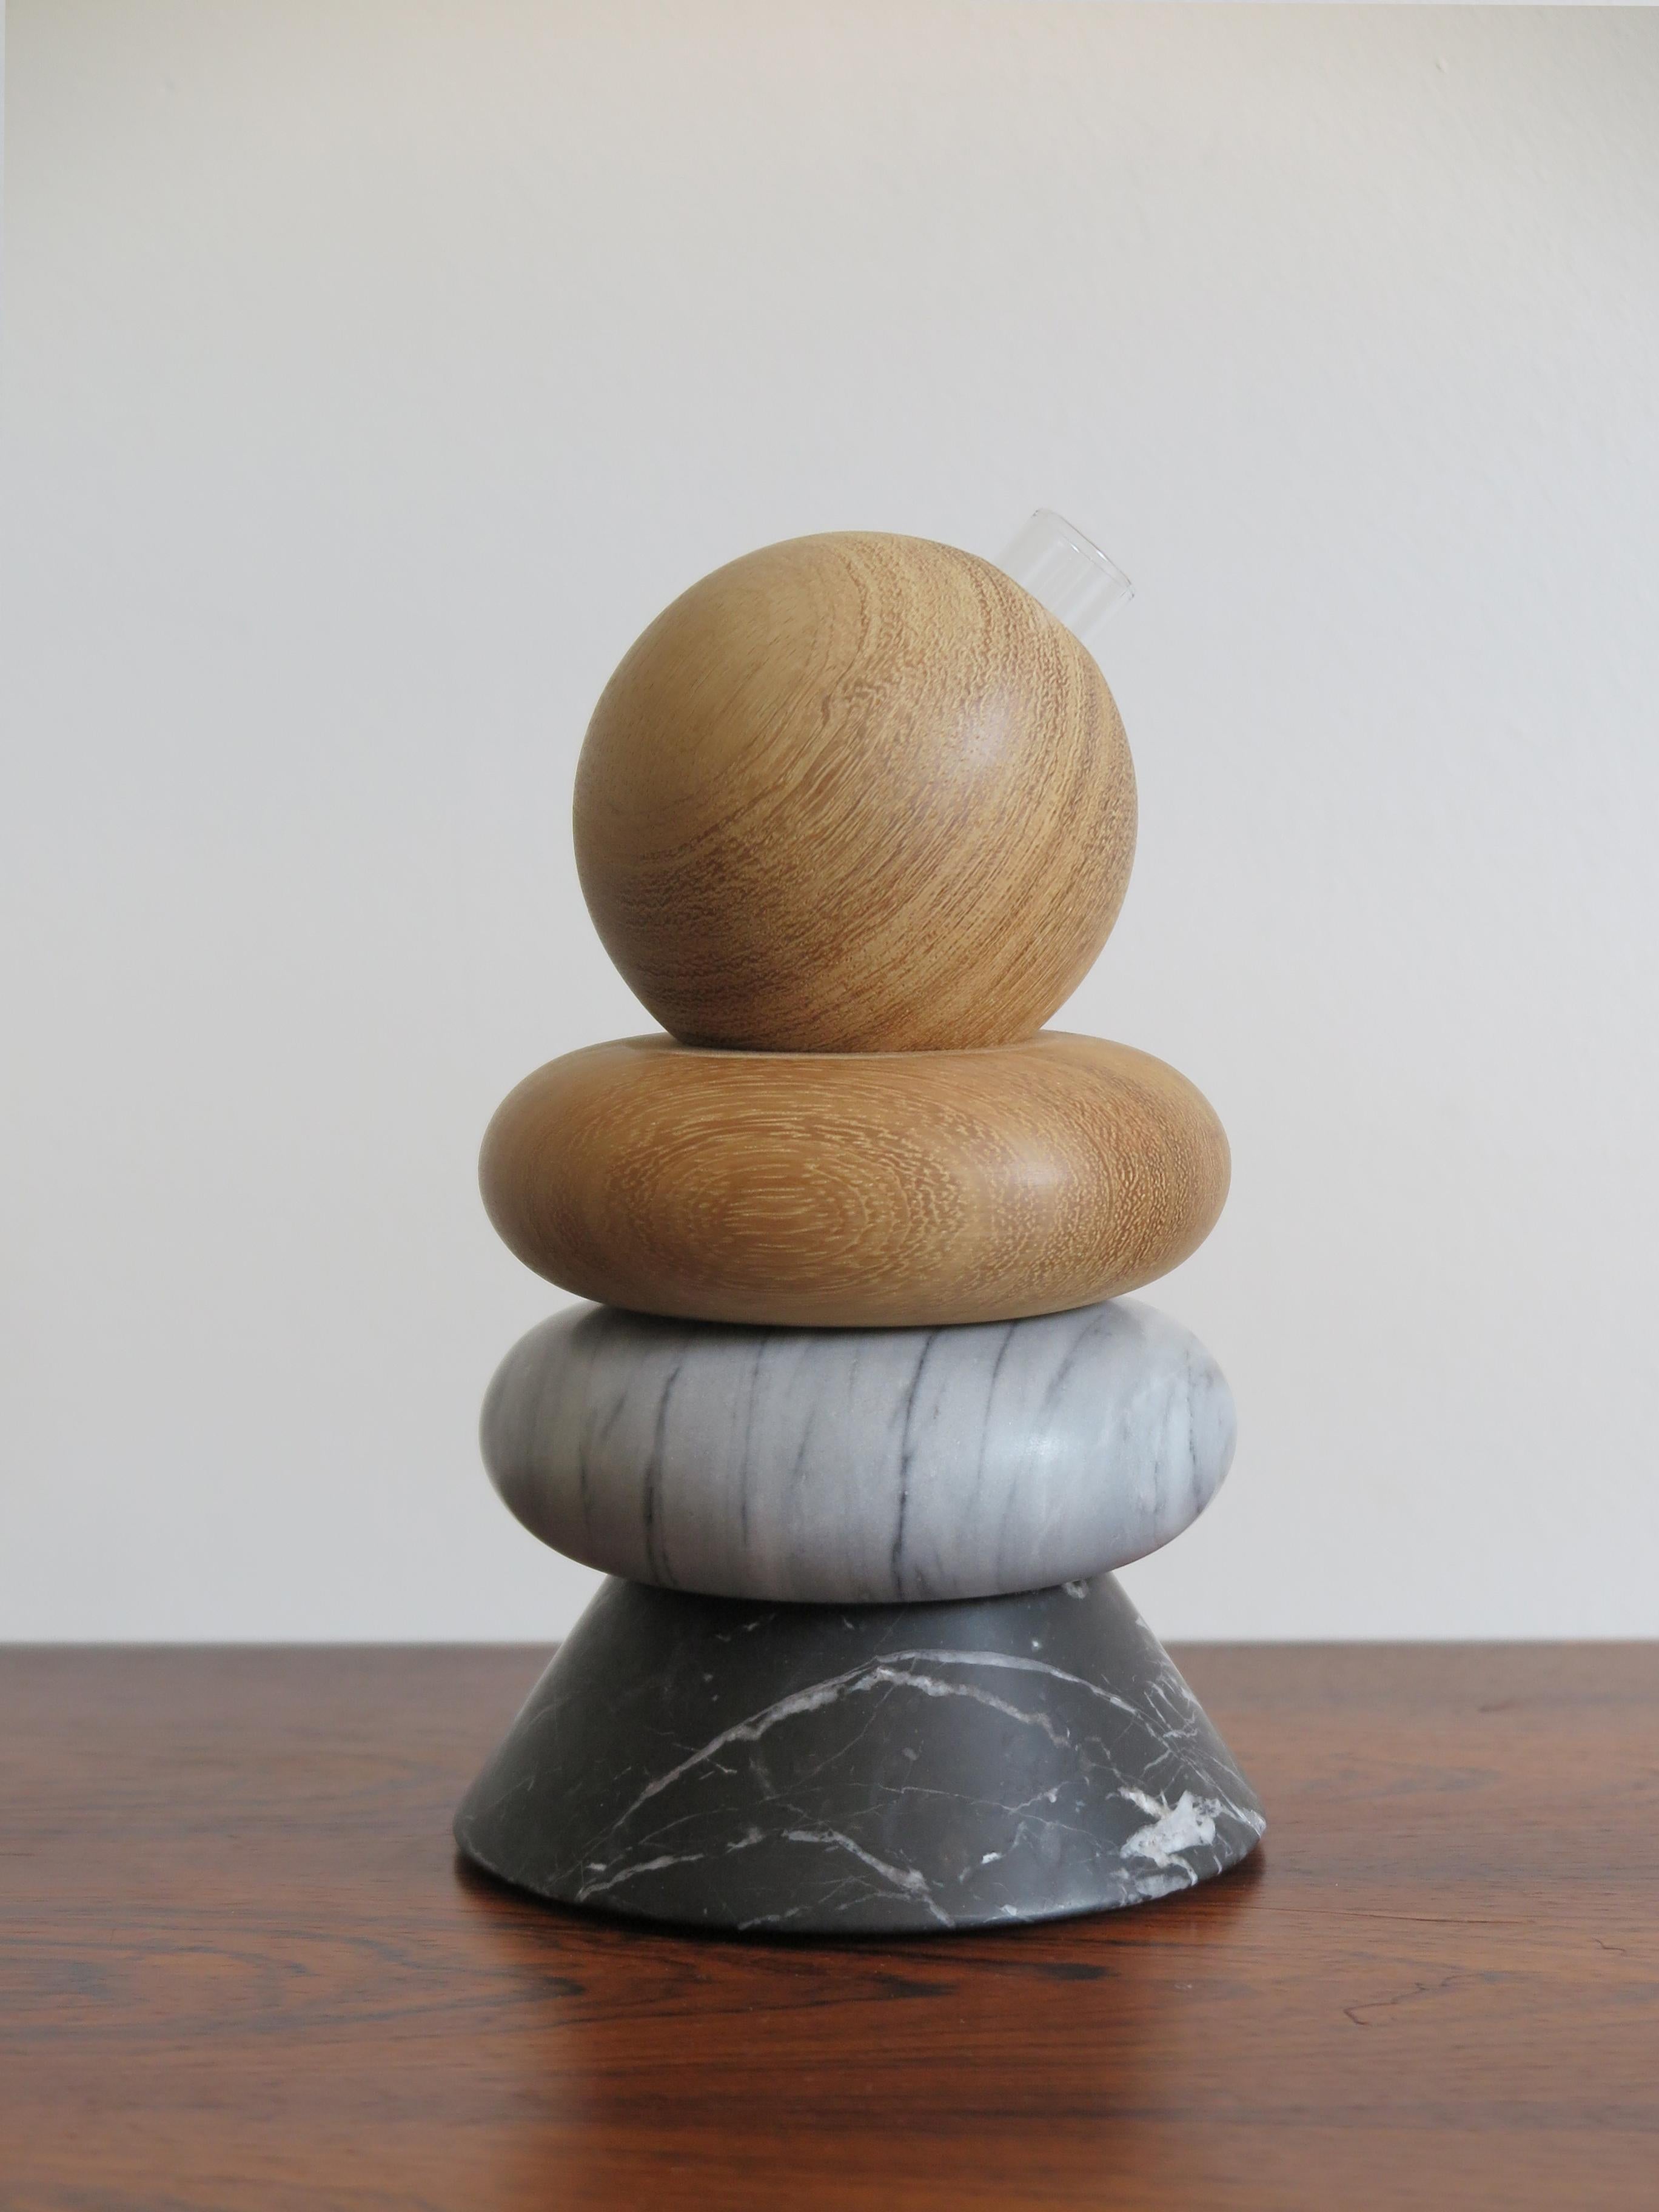 Modern Contemporary Handmade Carrara Marble and Wood Candleholder Sculpture Vase